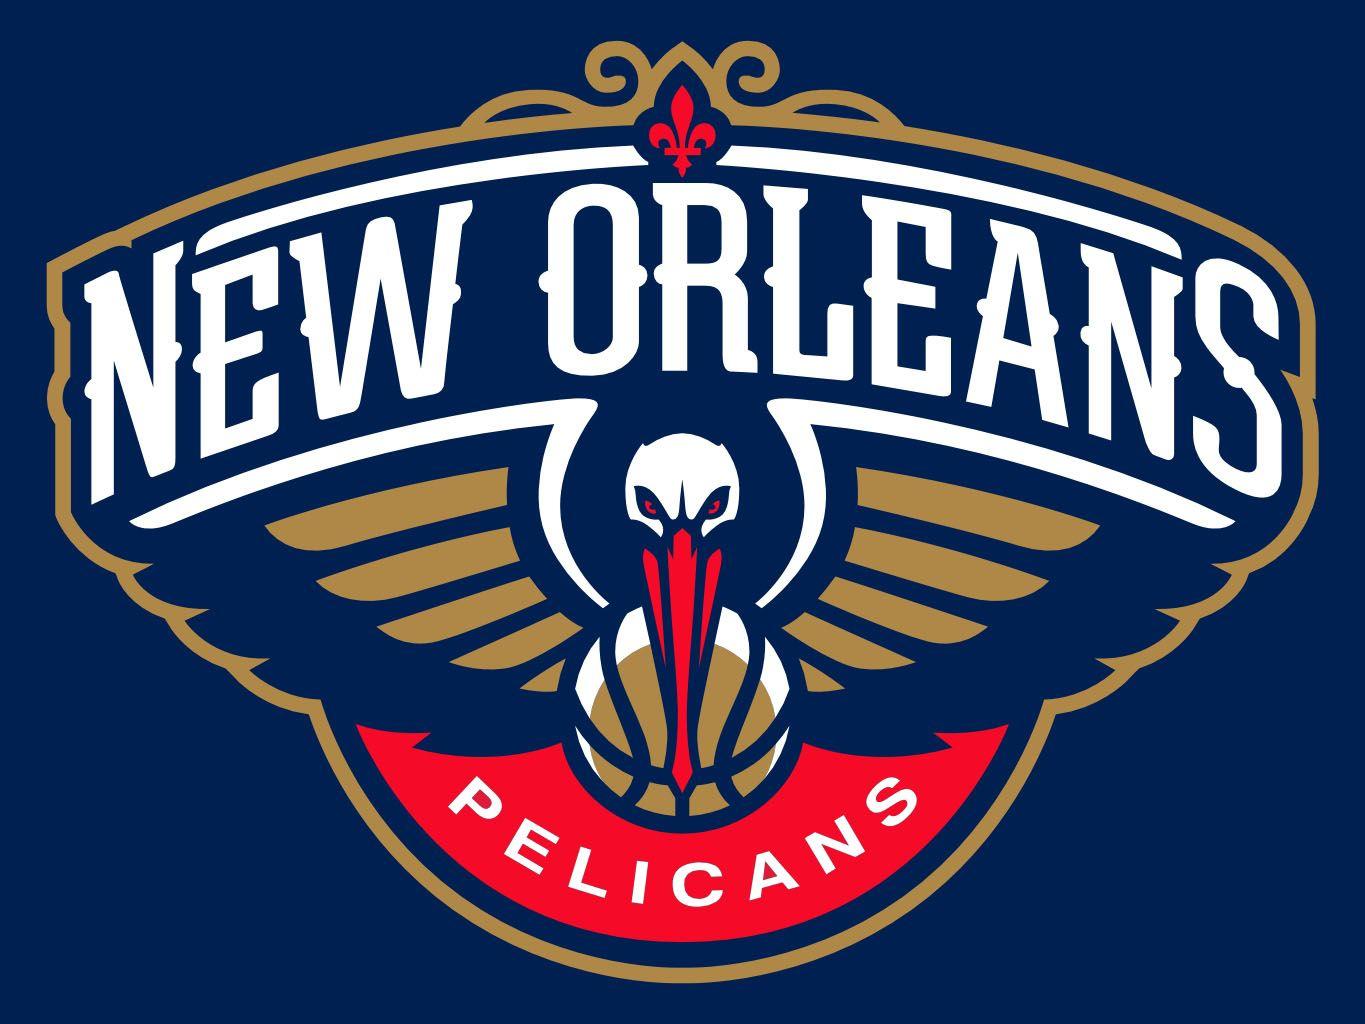 NBA New Orleans Pelicans Logo